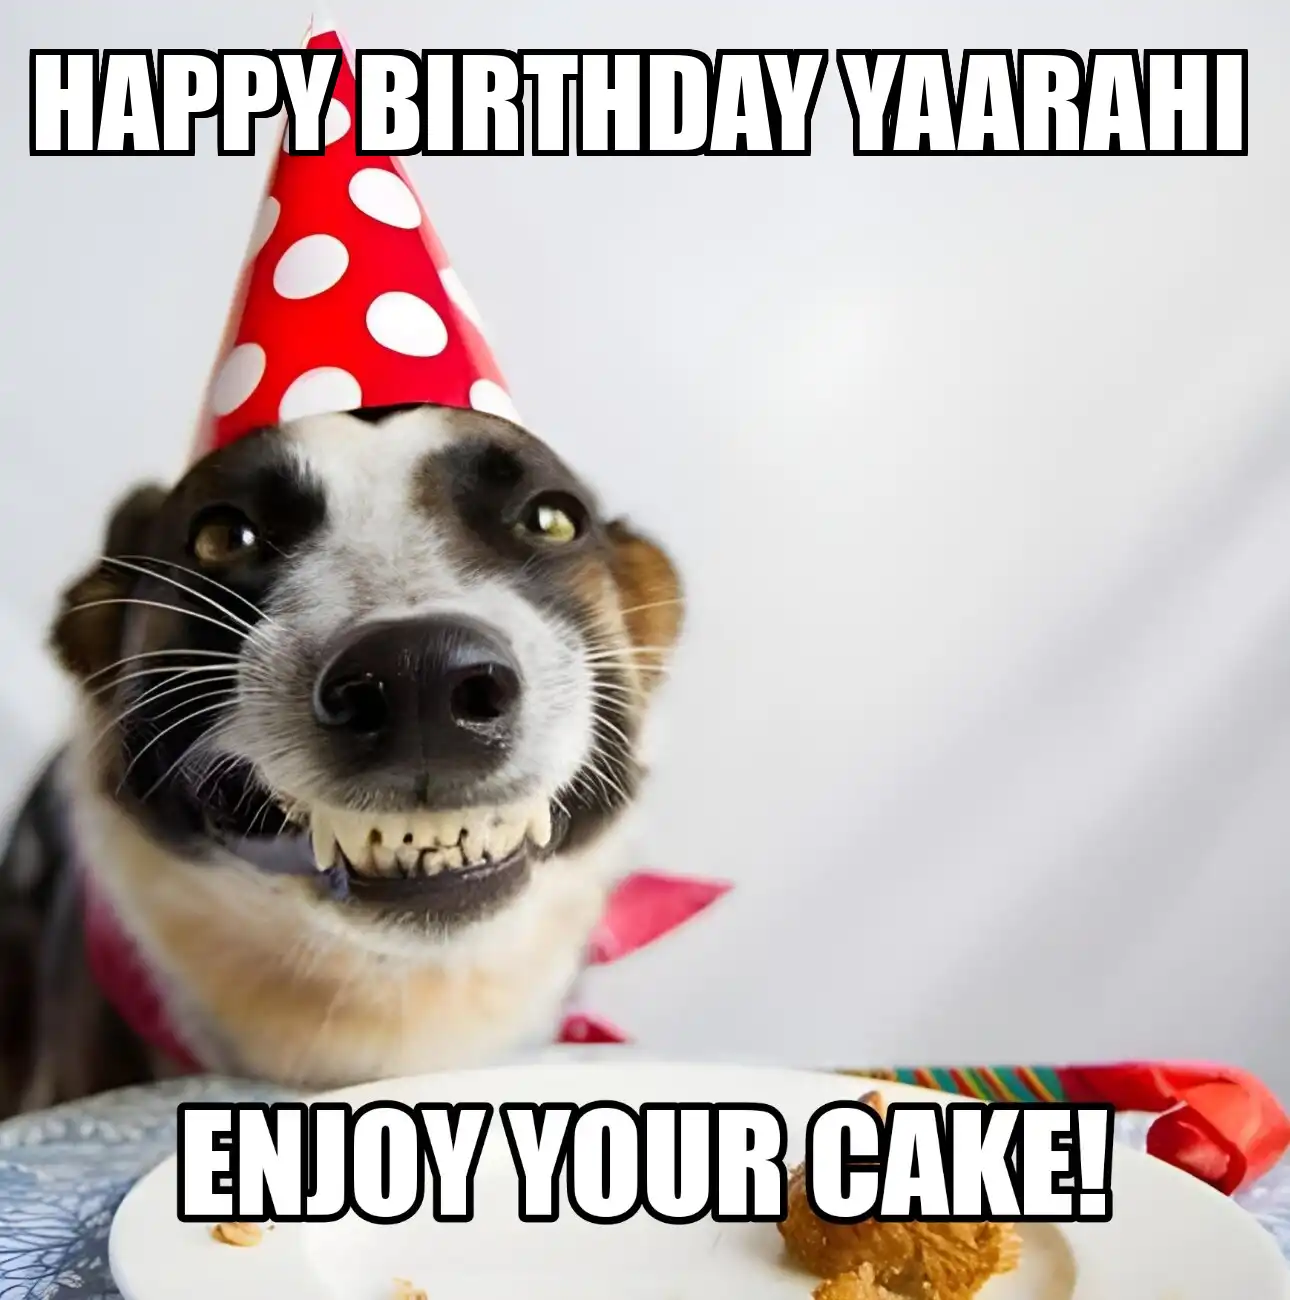 Happy Birthday Yaarahi Enjoy Your Cake Dog Meme